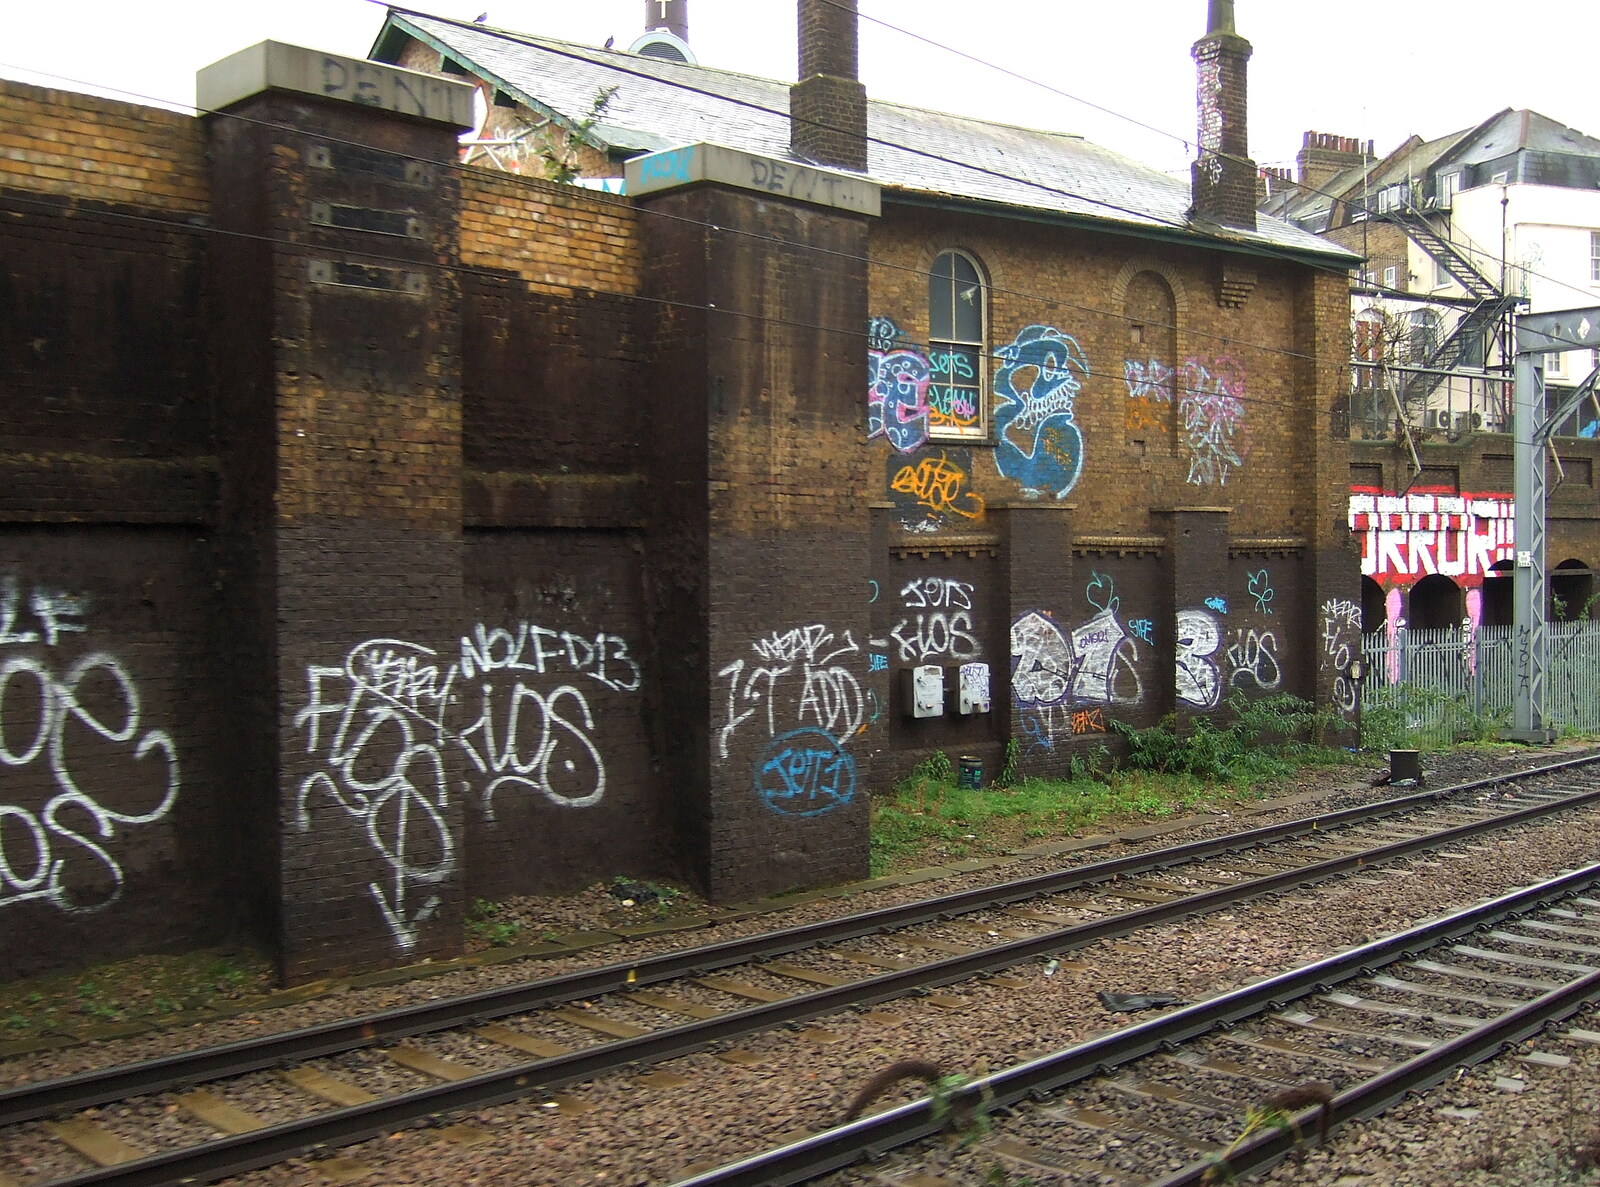 Graffiti around Brick Lane from Railway Randomness, and Grandad Sets Fire to Stuff, London and Brome, Suffolk - 22nd January 2012